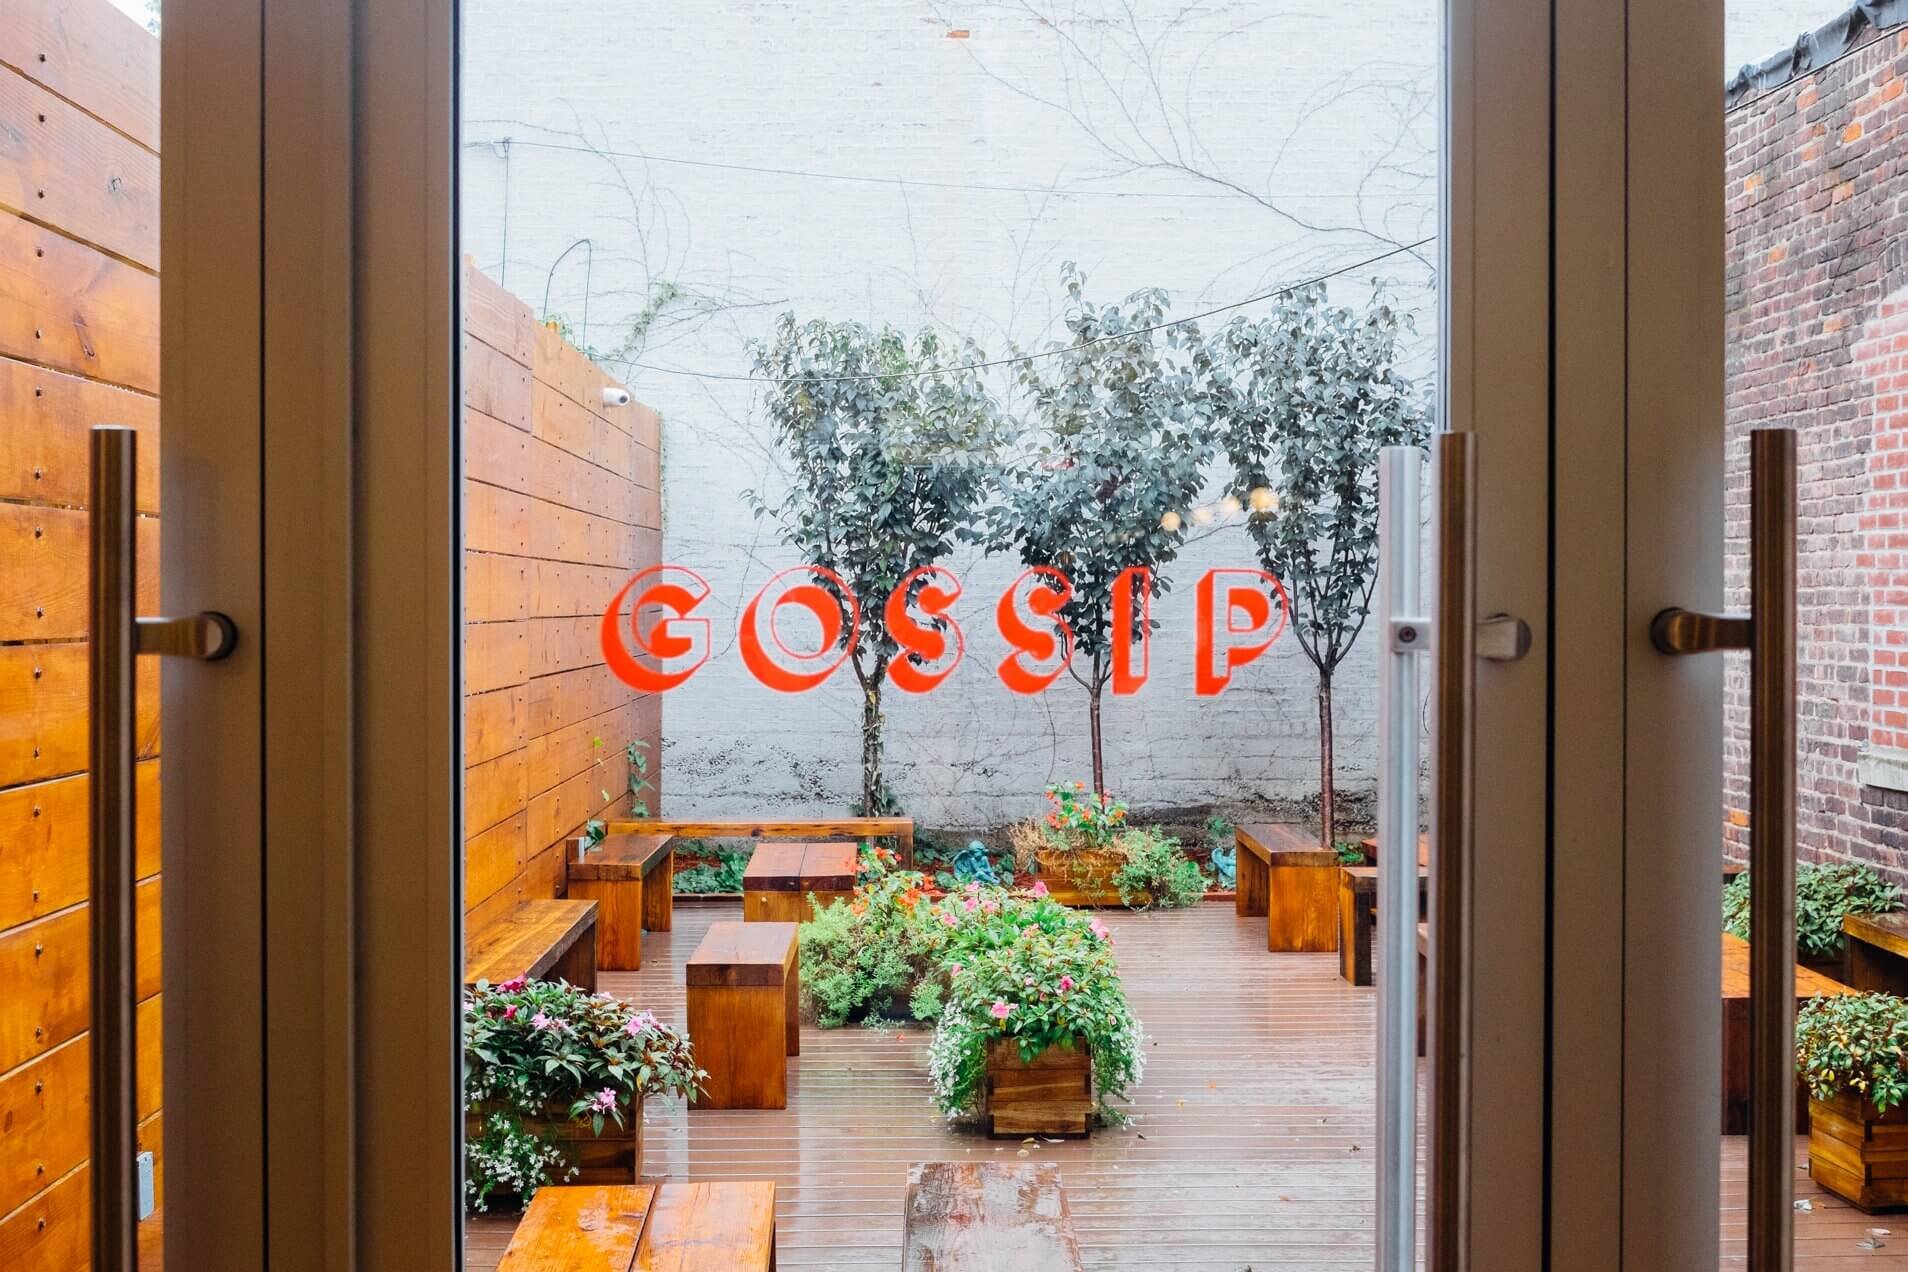 Gossip Coffee, Astoria, NY